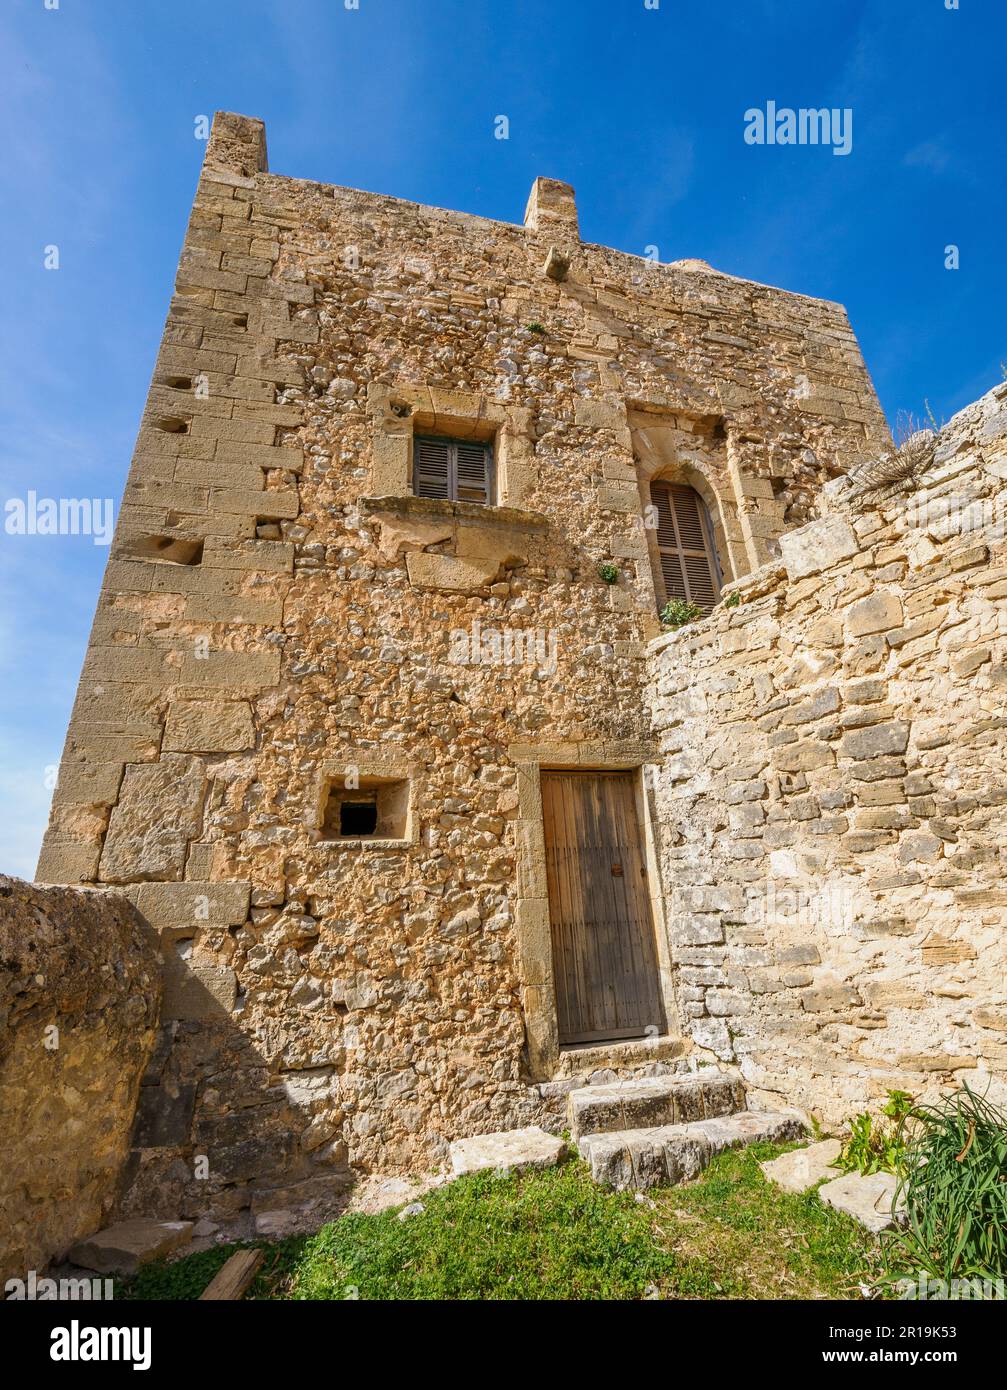 Le Santuari de la Mare de Deu del Puig fortifié sur le sommet de Puig de Maria à l'extérieur de Pollenca dans les montagnes Tramuntana de Majorque Espagne Banque D'Images